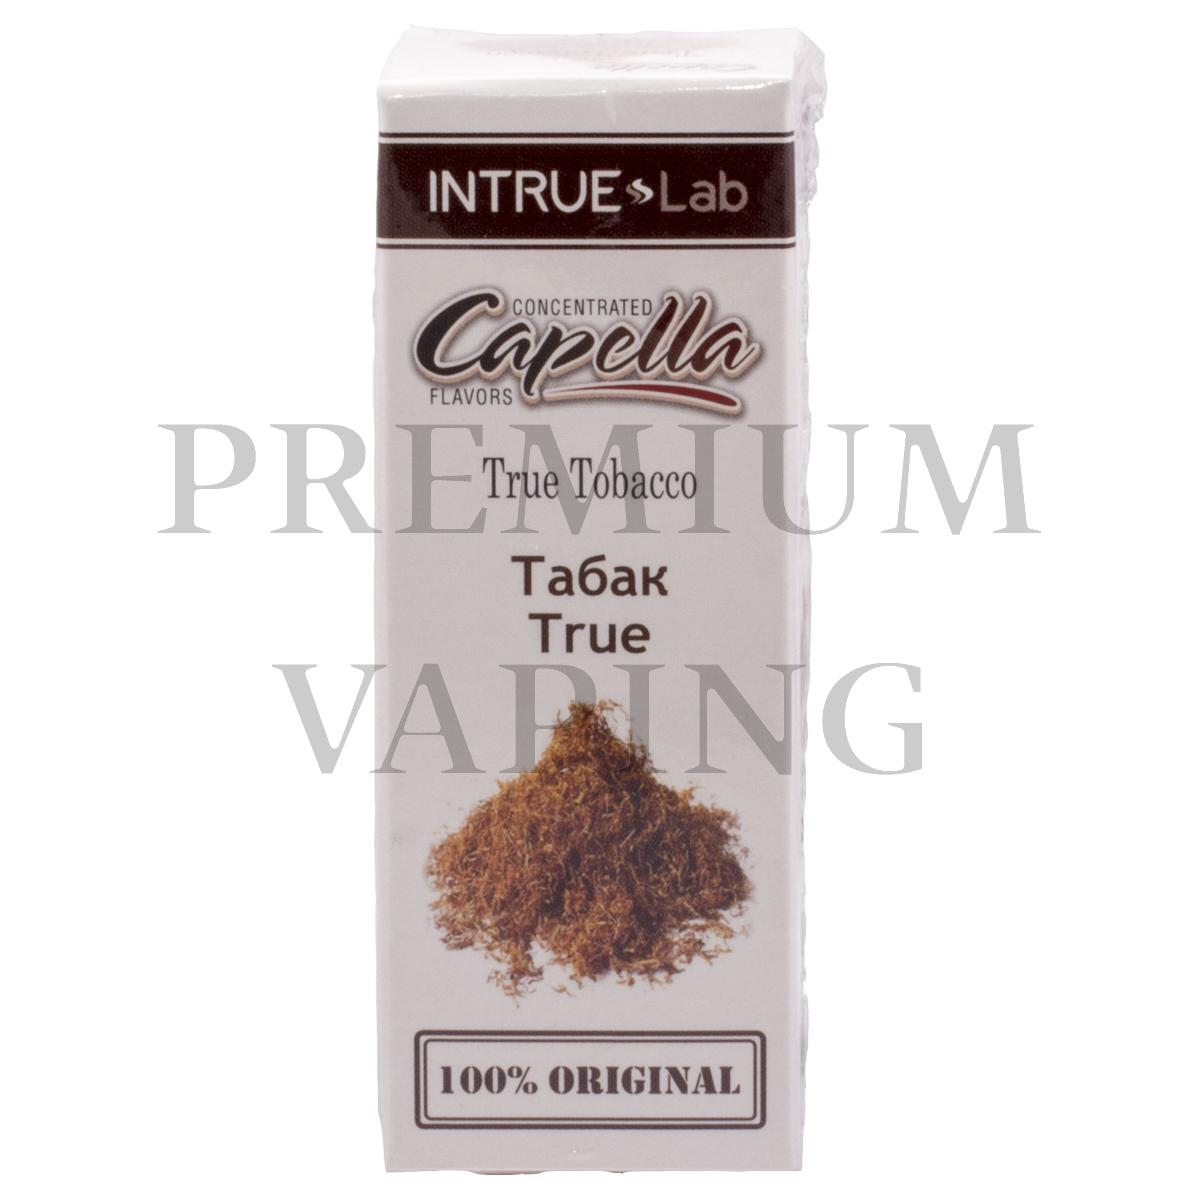 Capella Intrue Lab — True Tobacco